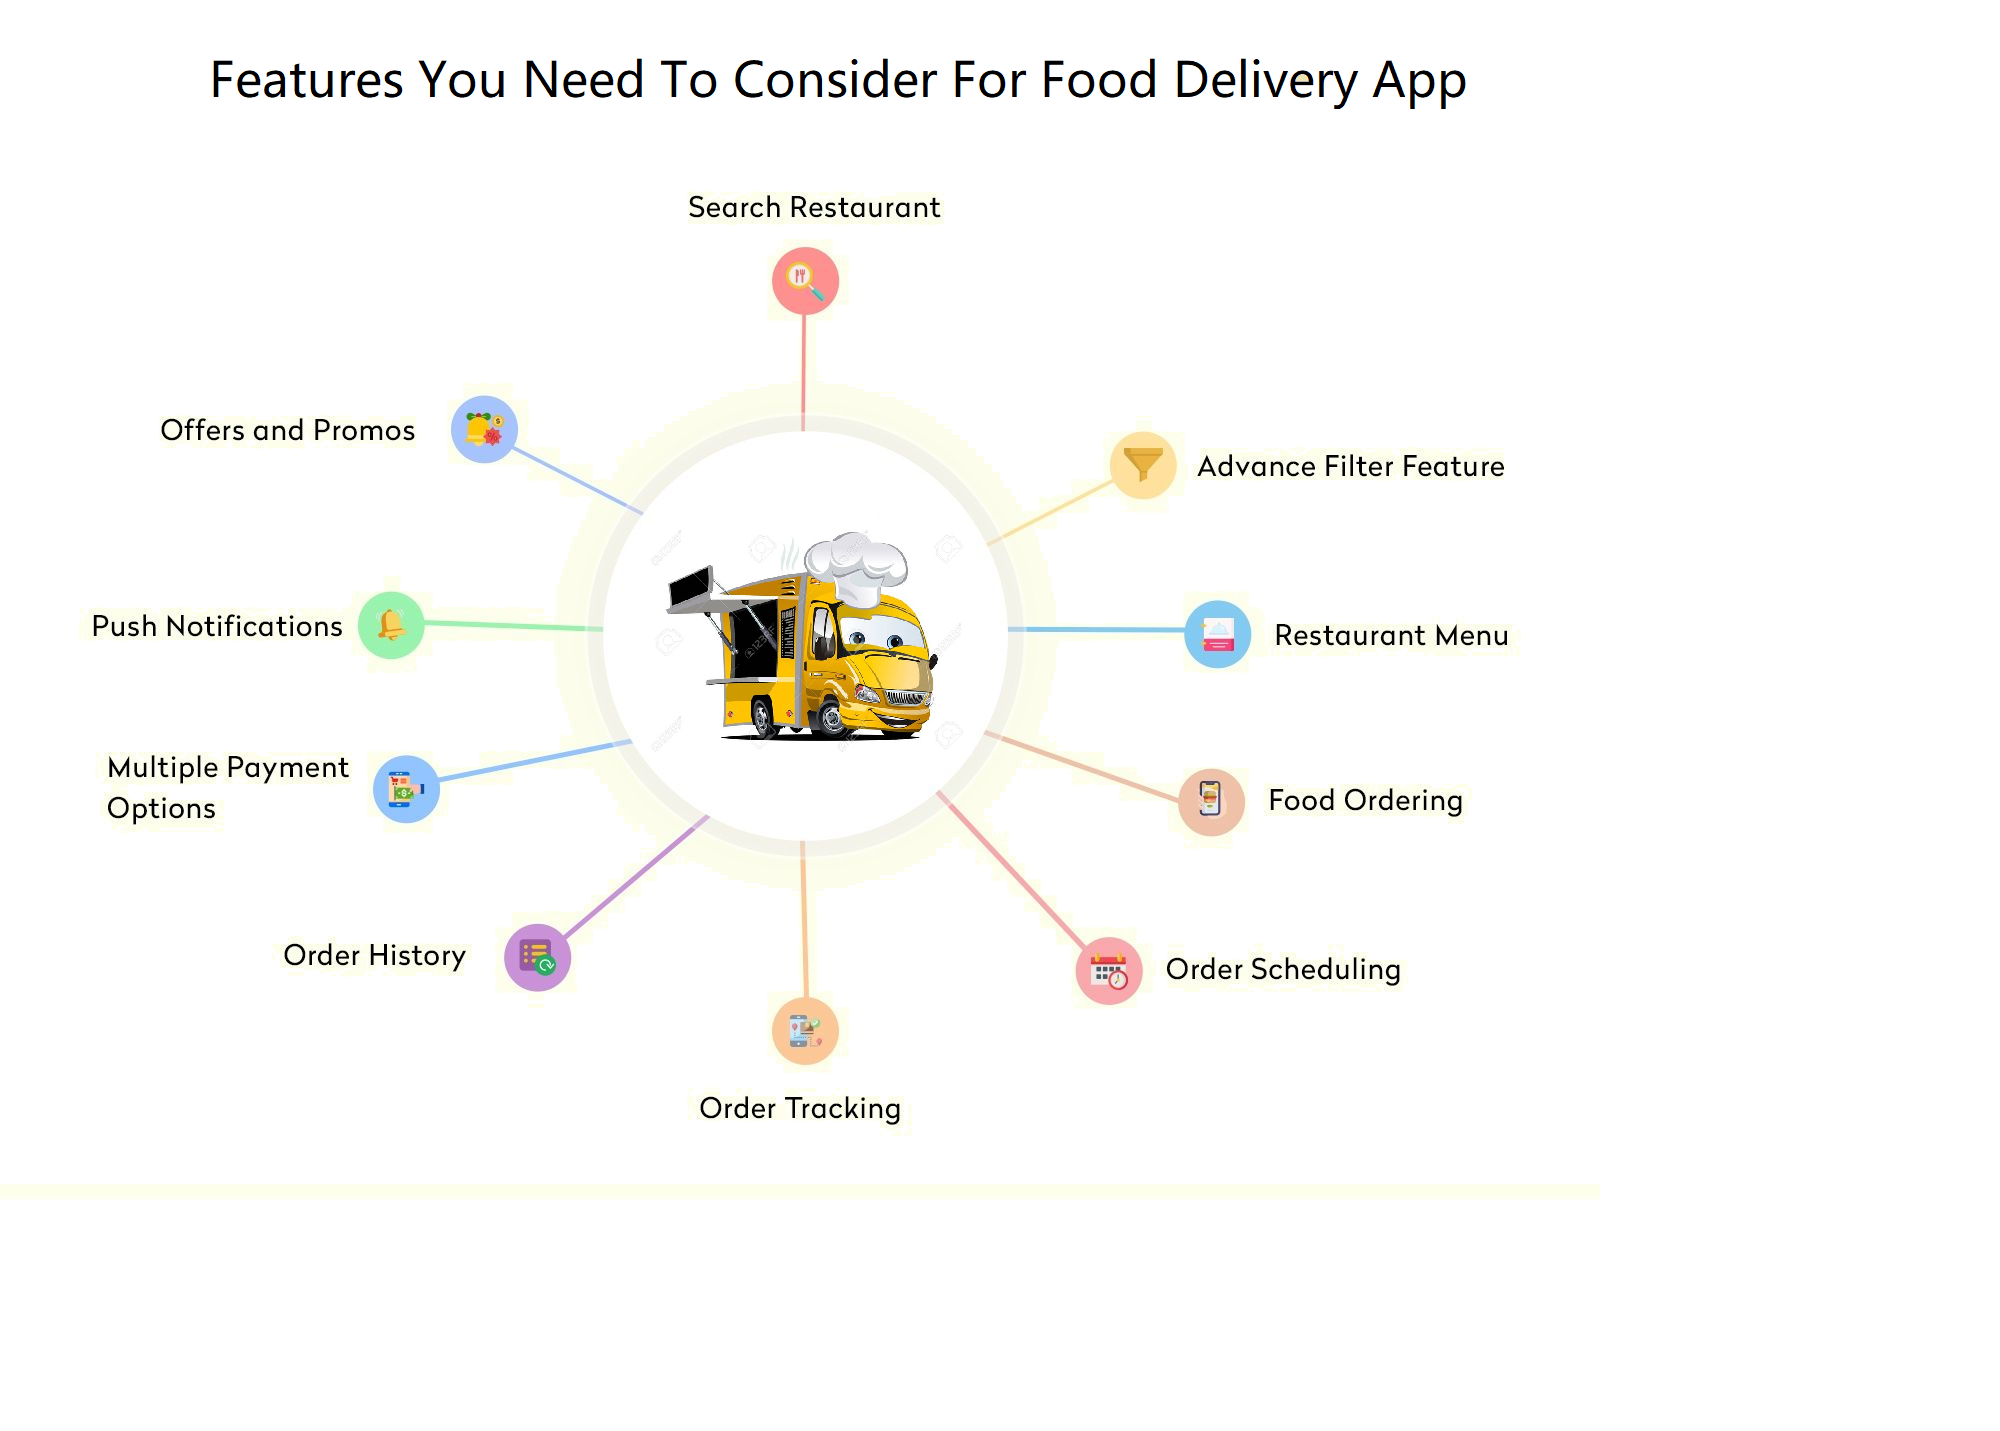 Food Truck App